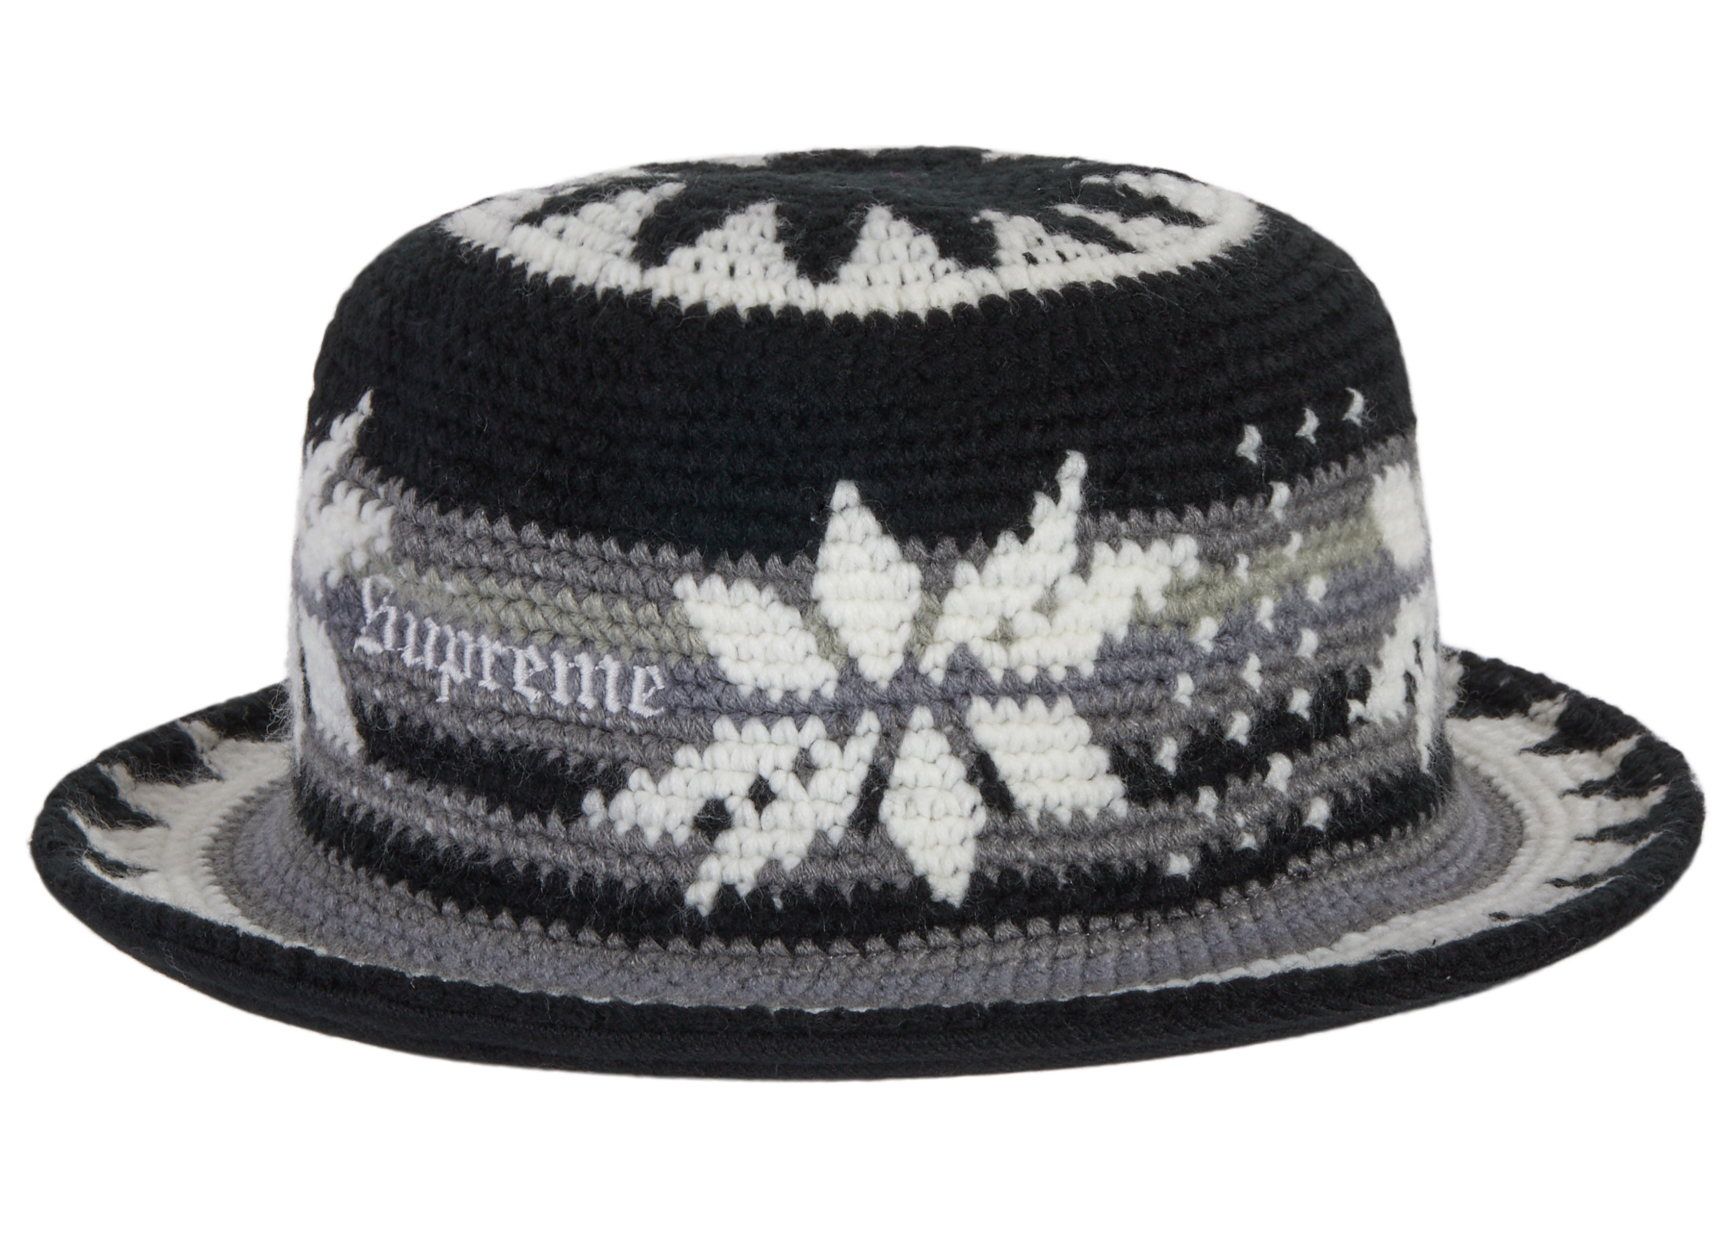 Supreme Crochet Edge Hat Black M/L-